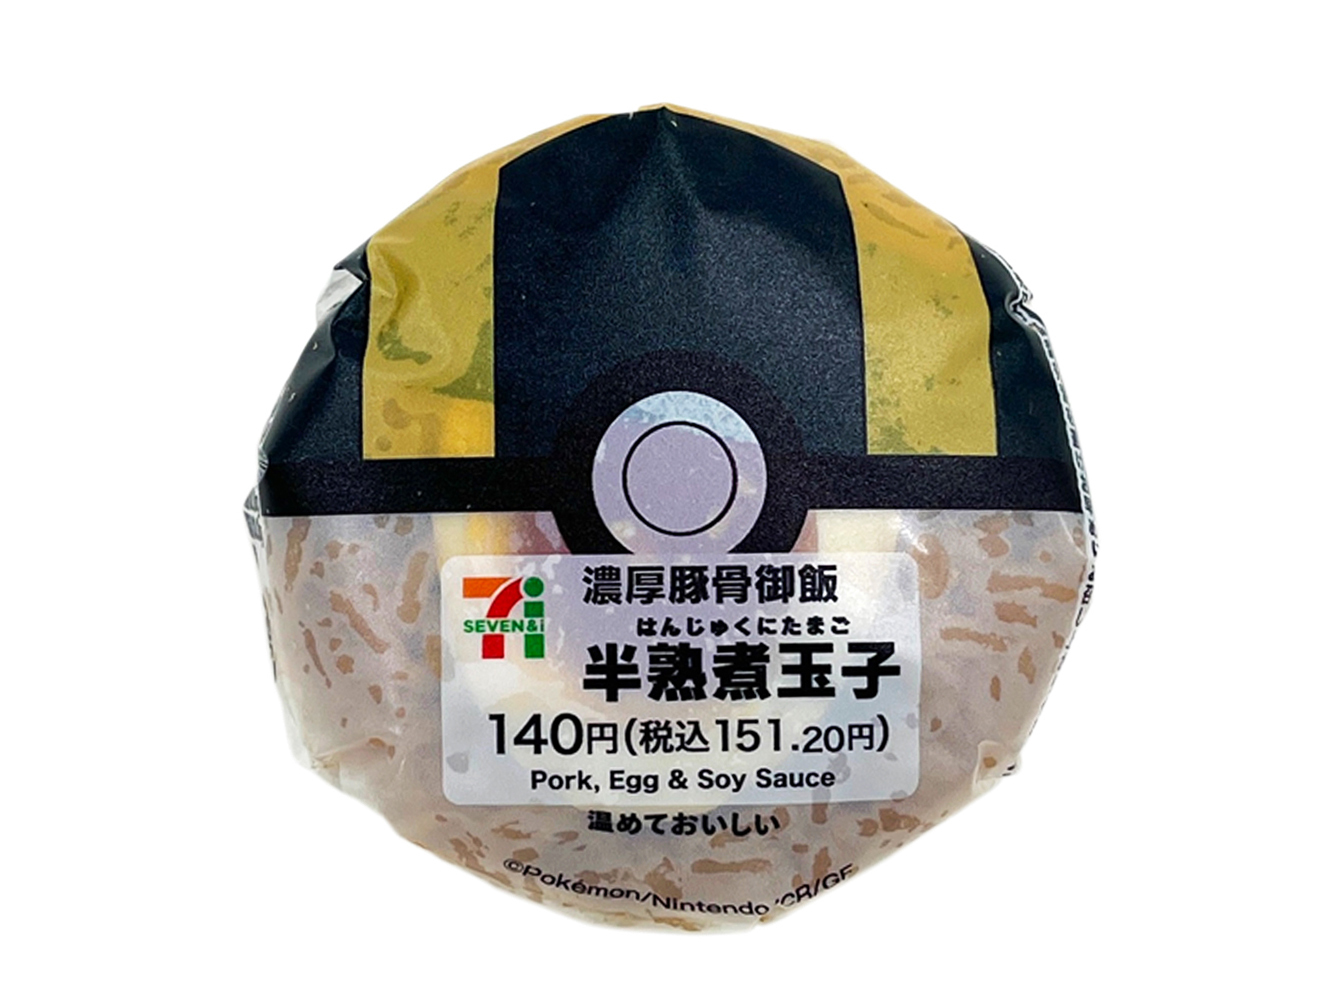 rice balls pokemon